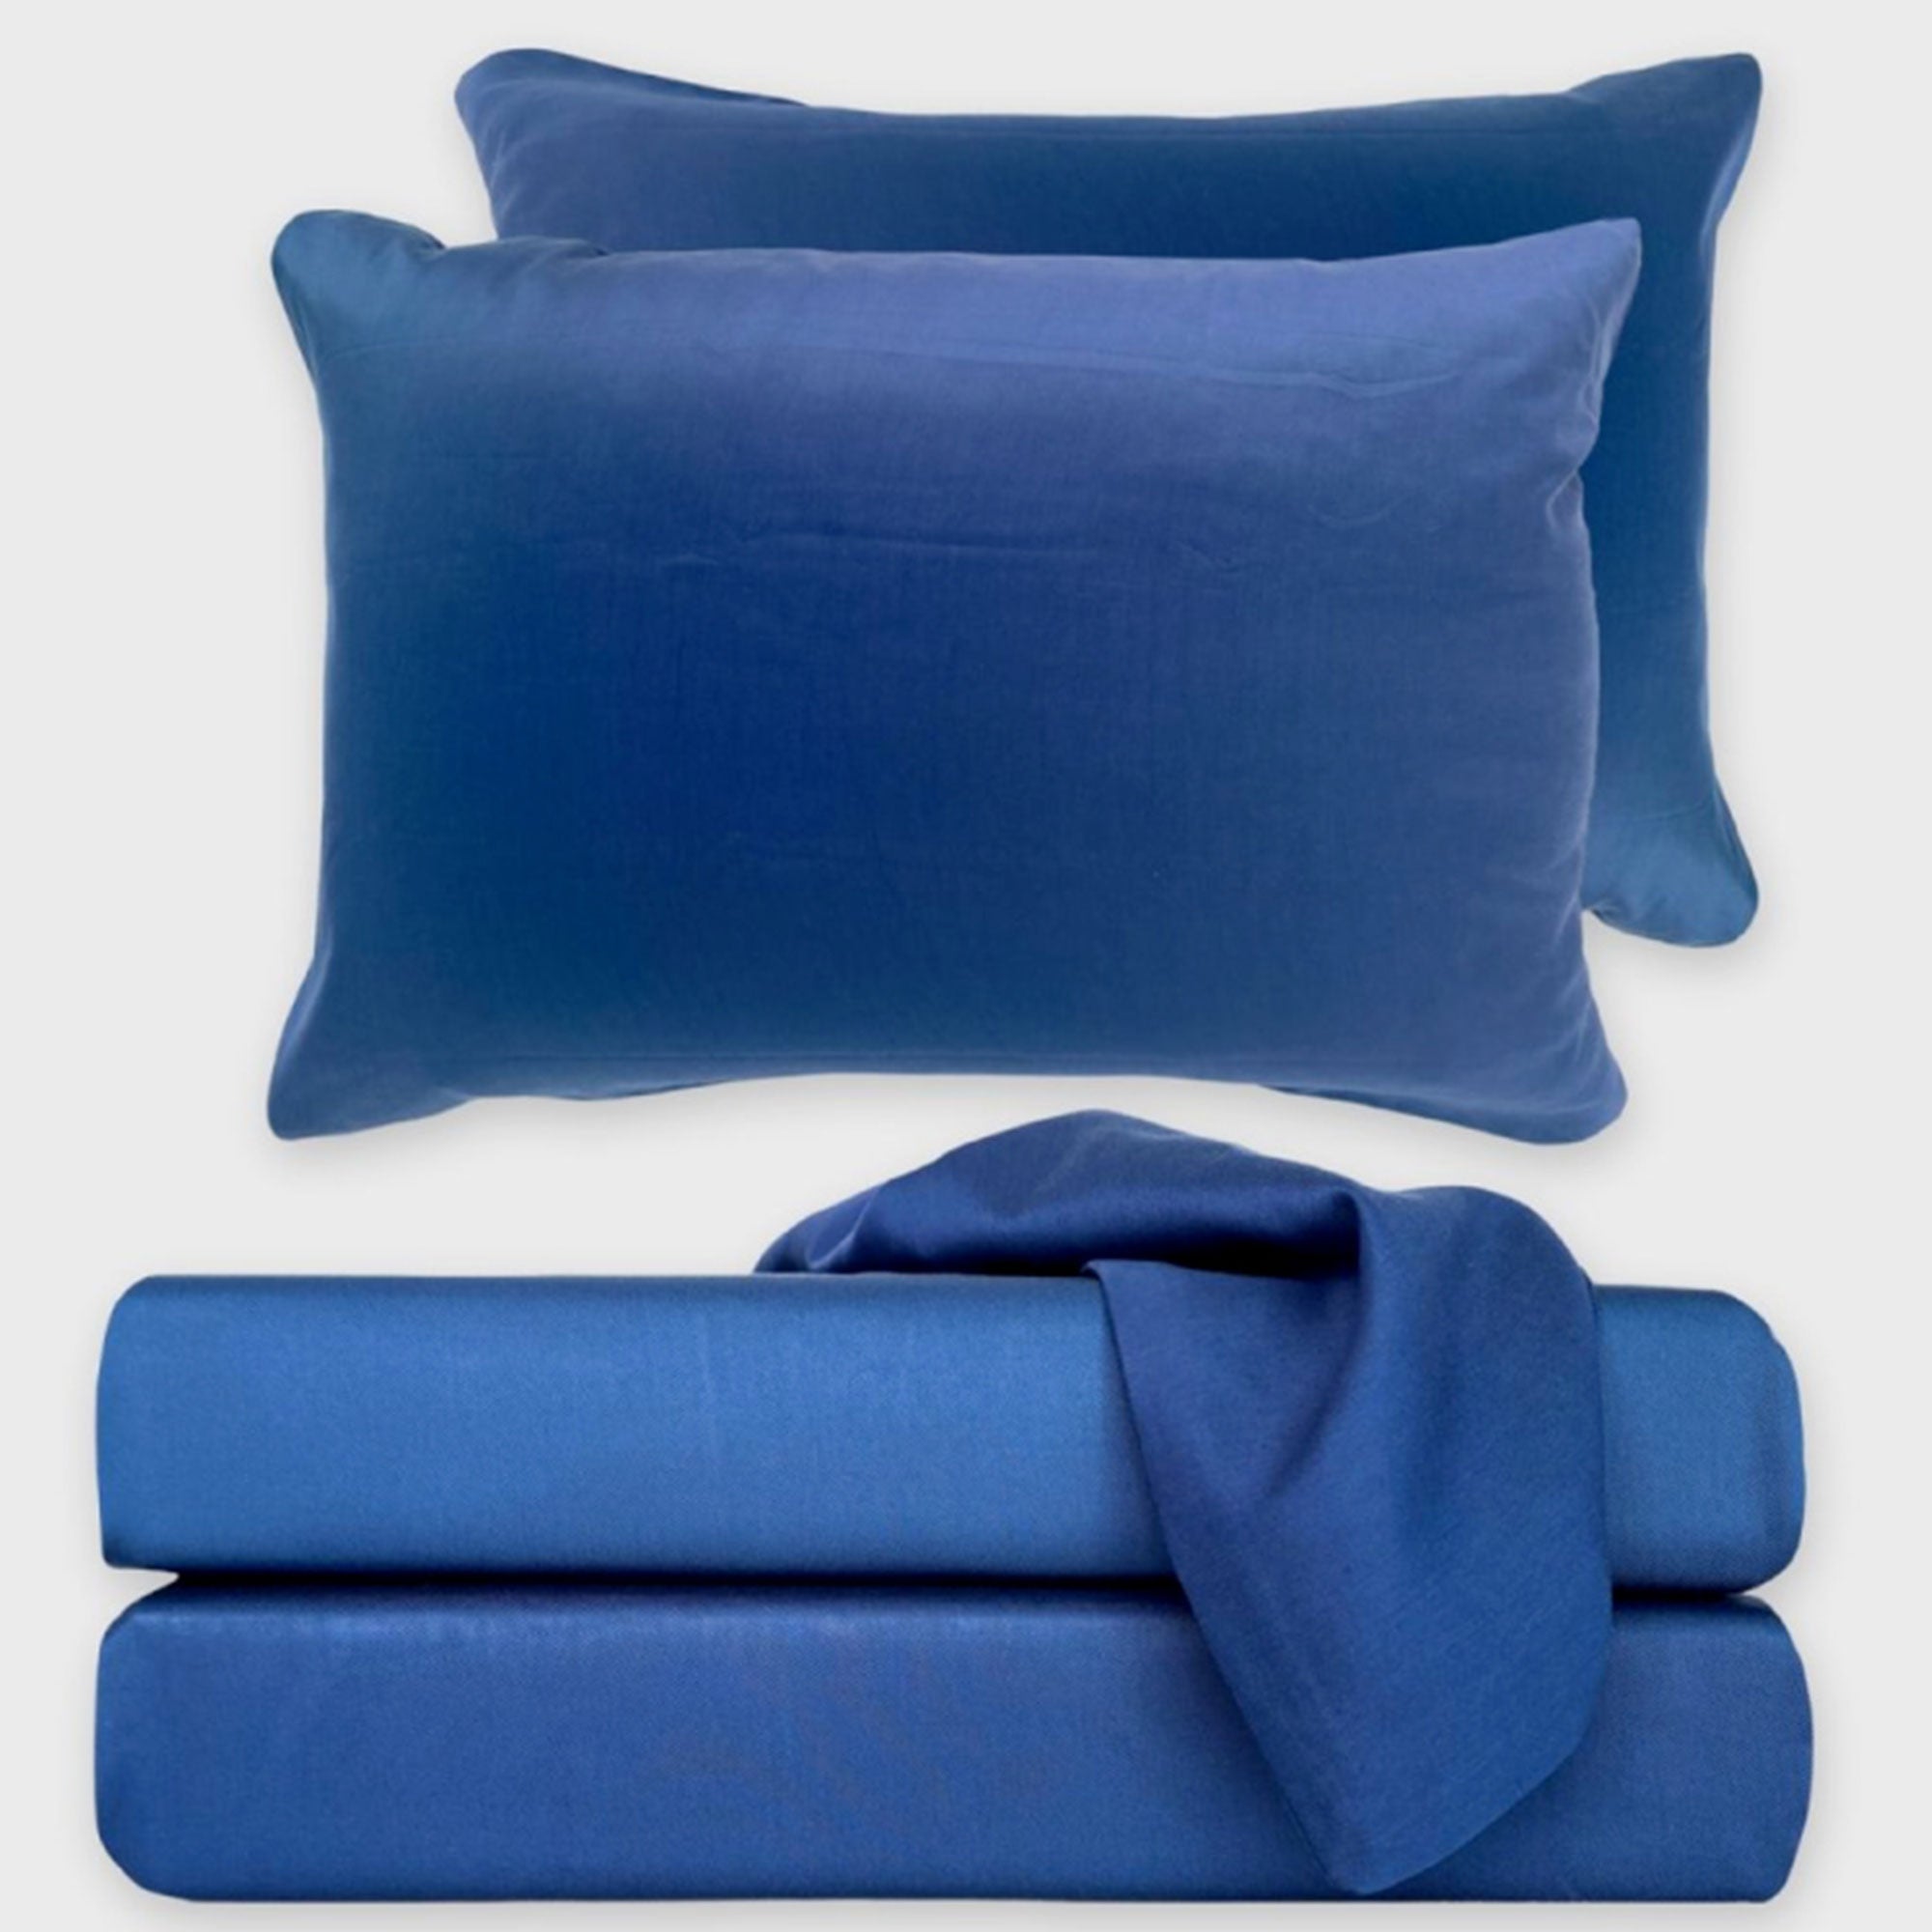 dark blue indigo bamboo sheet set stack with floating pillows and draped pillowcase